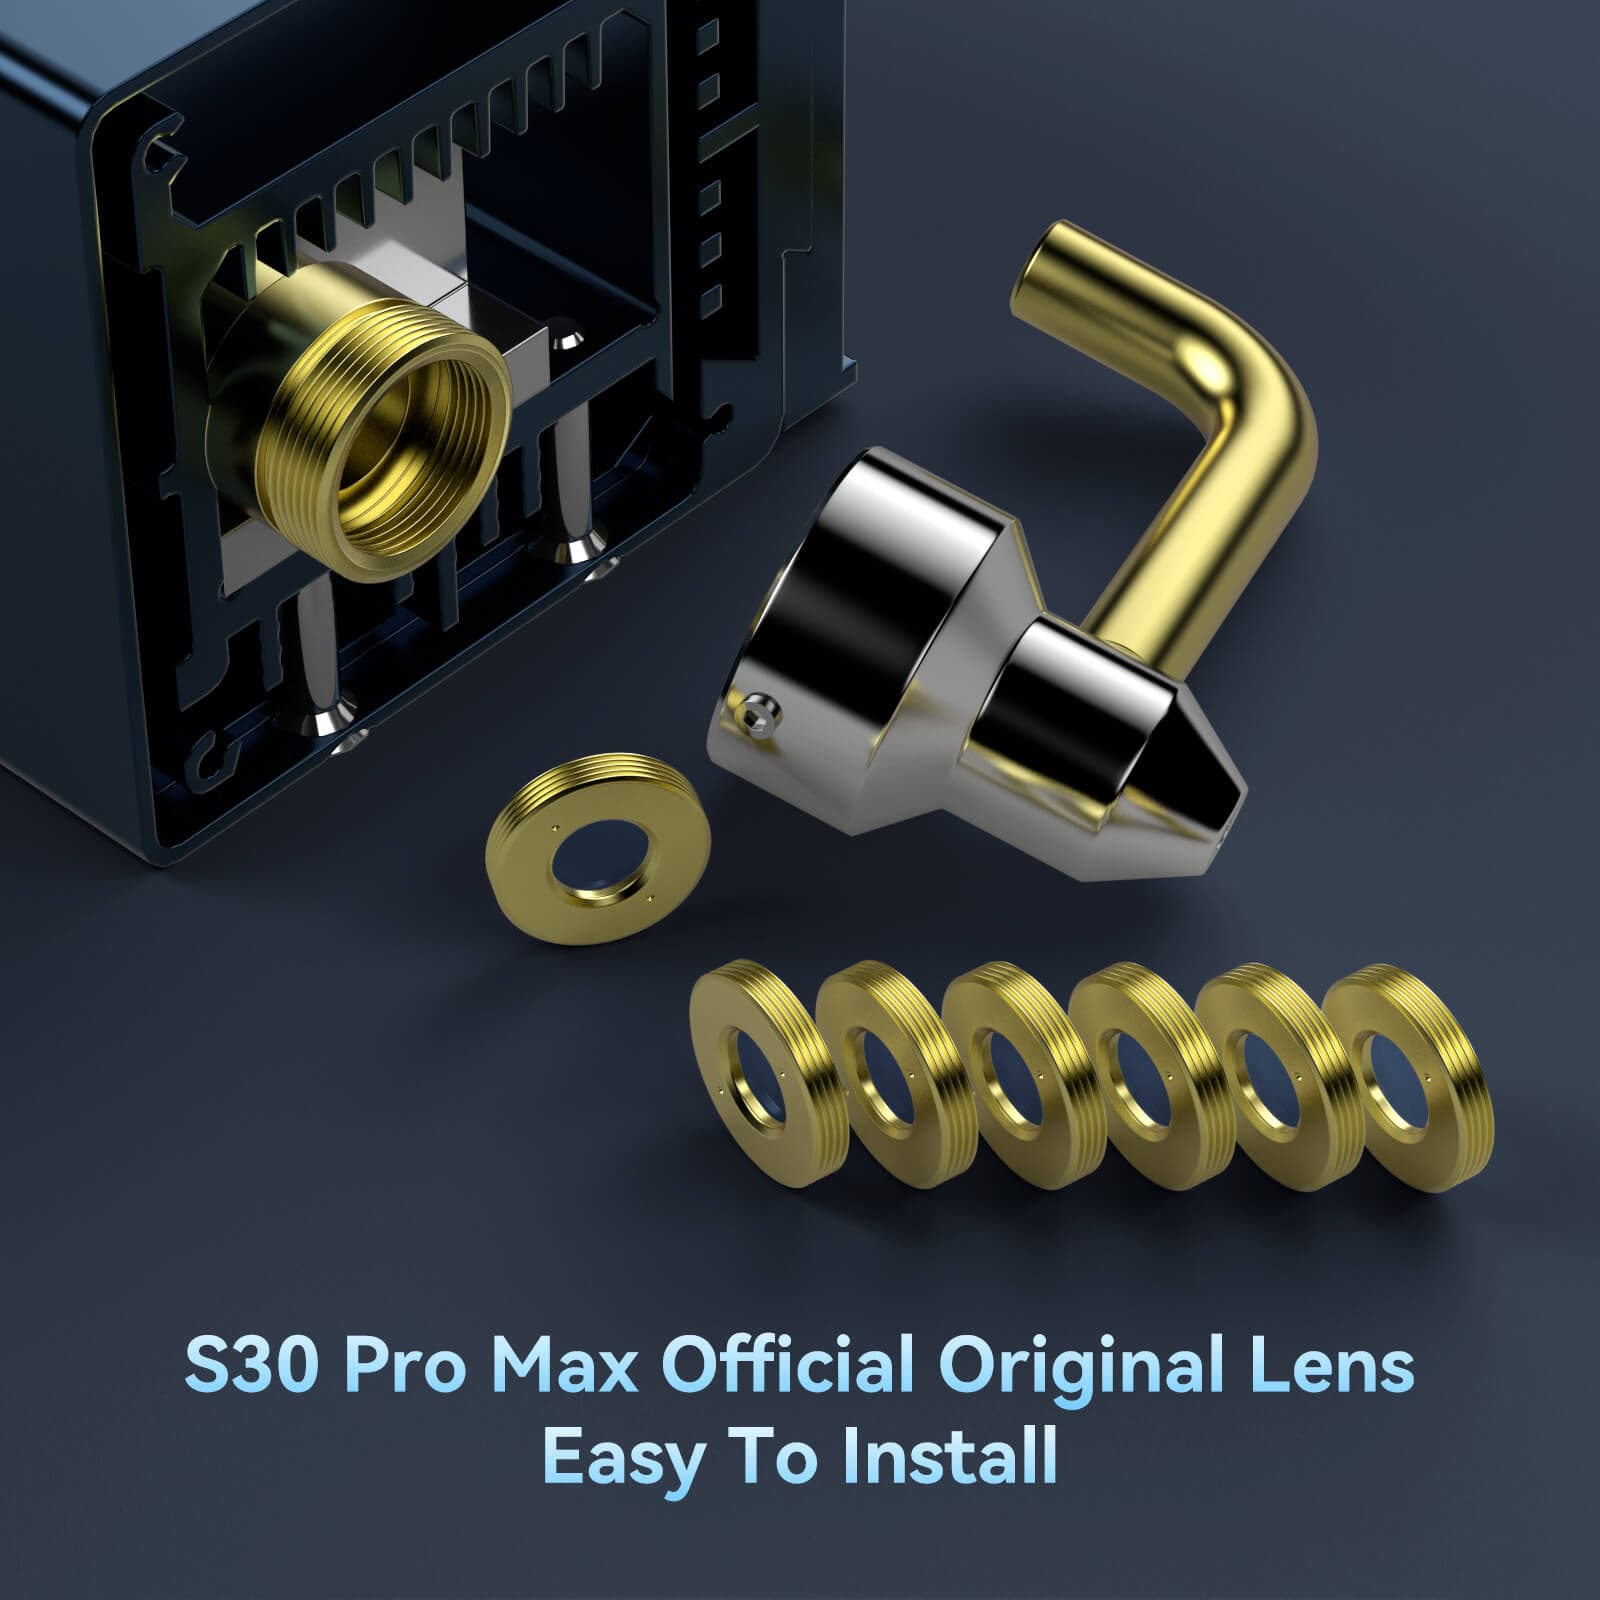 S30 Pro Max original lens easy to install